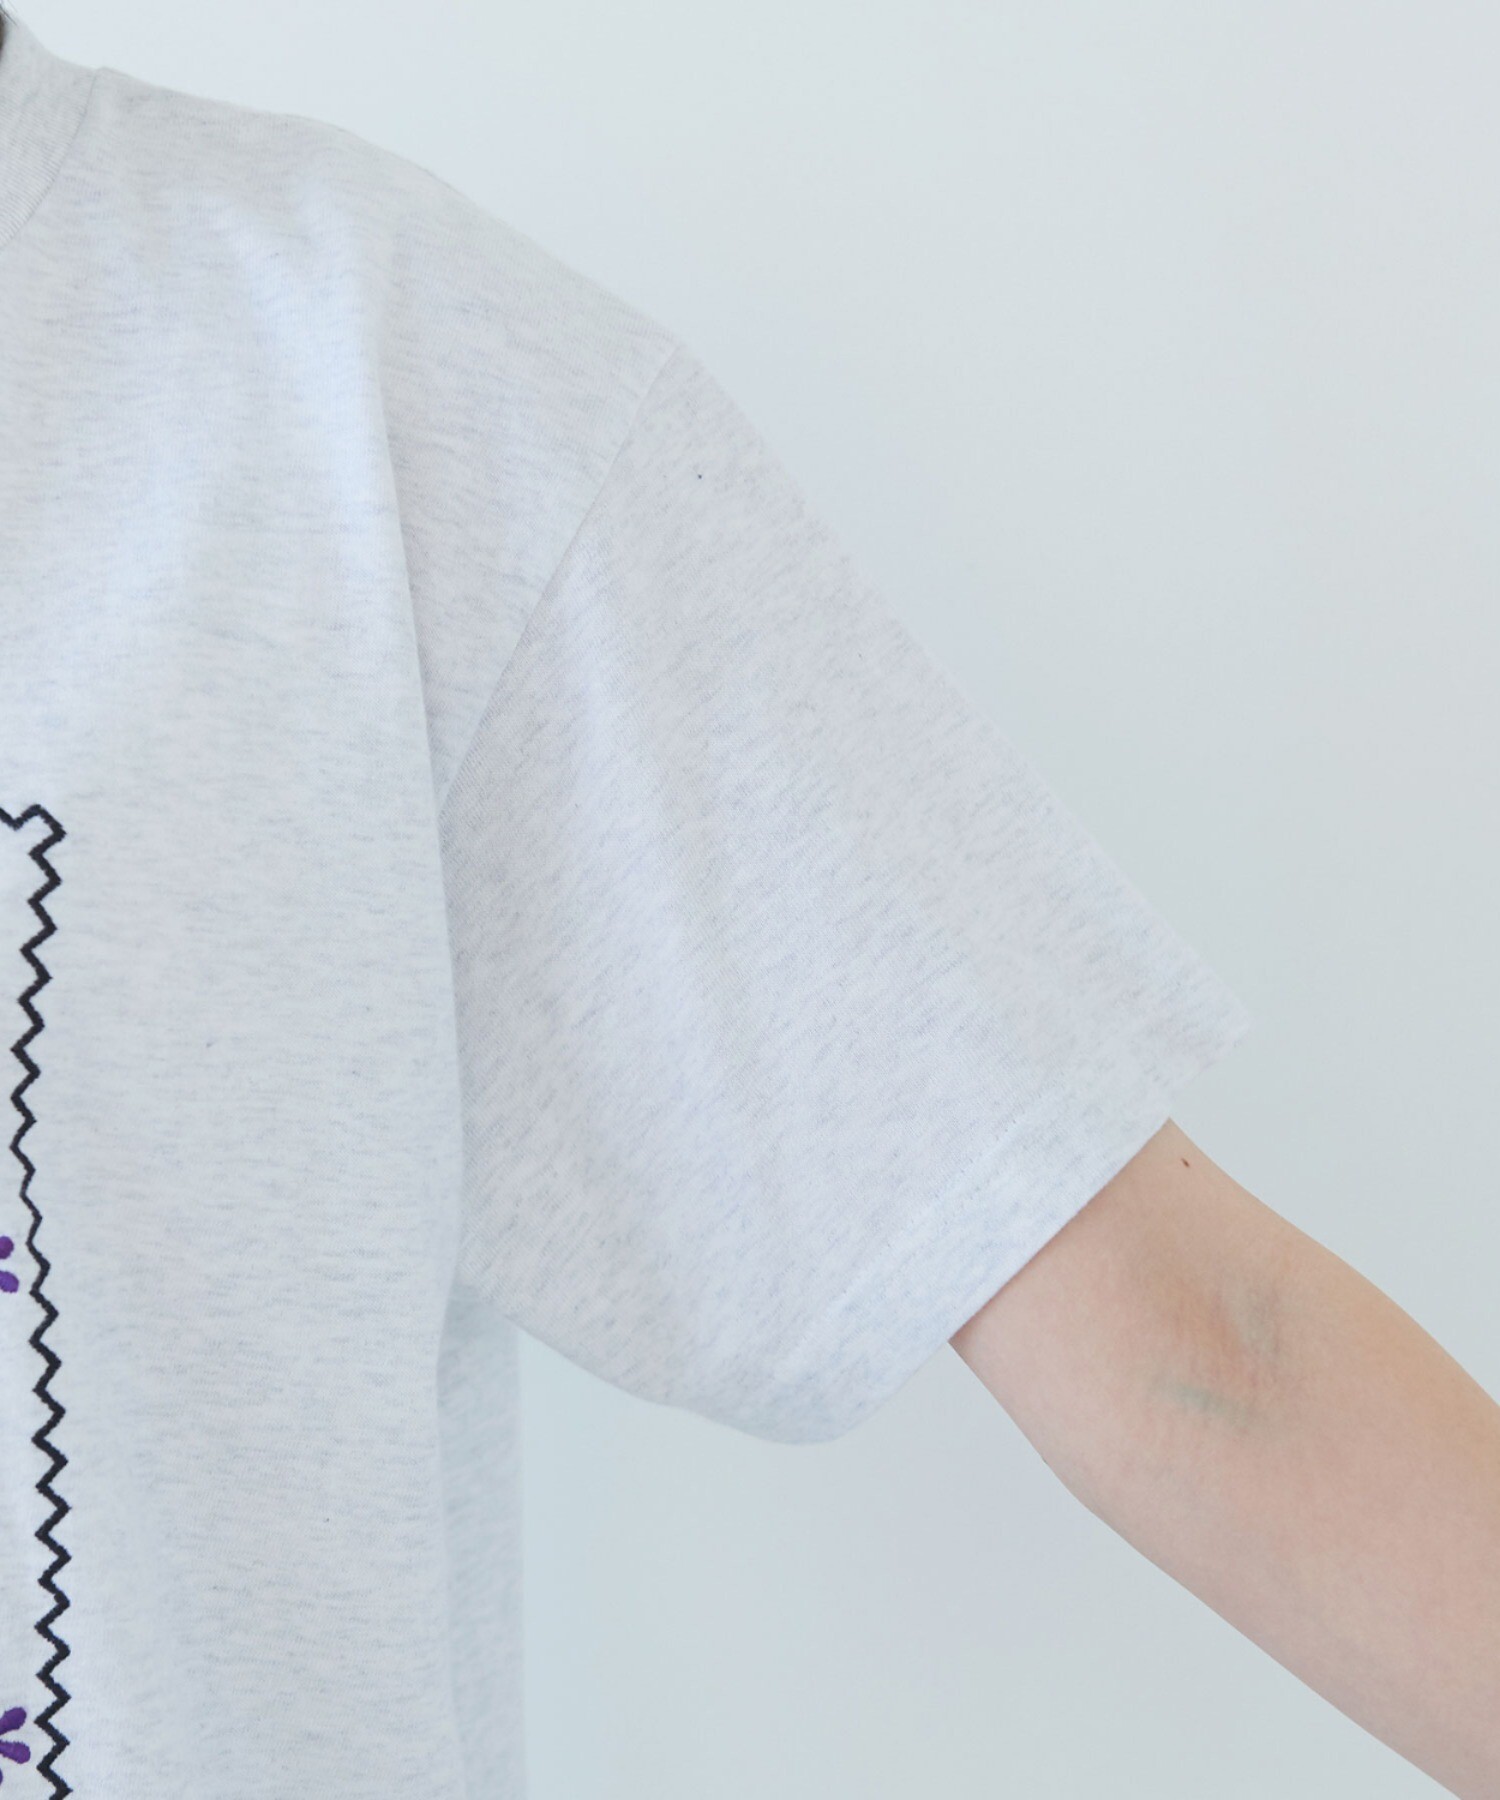 AMBIDEX Store ○souvenir embroidery Tシャツ(F シロ): yuni